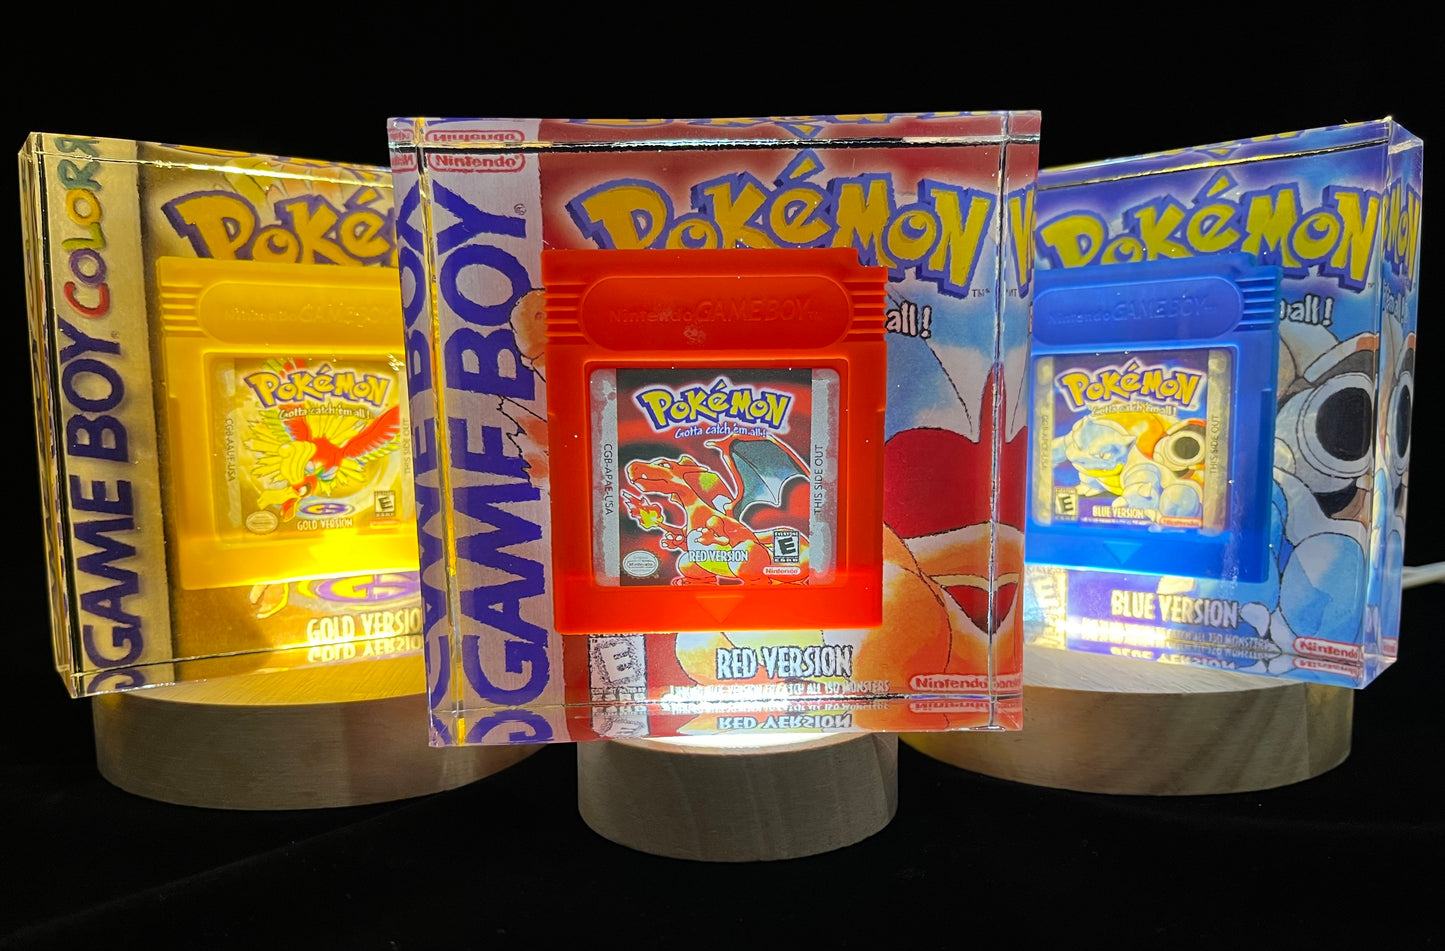 Pokémon Gameboy Color Display Nostalgia Handmade Piece - Red, Blue, or Gold